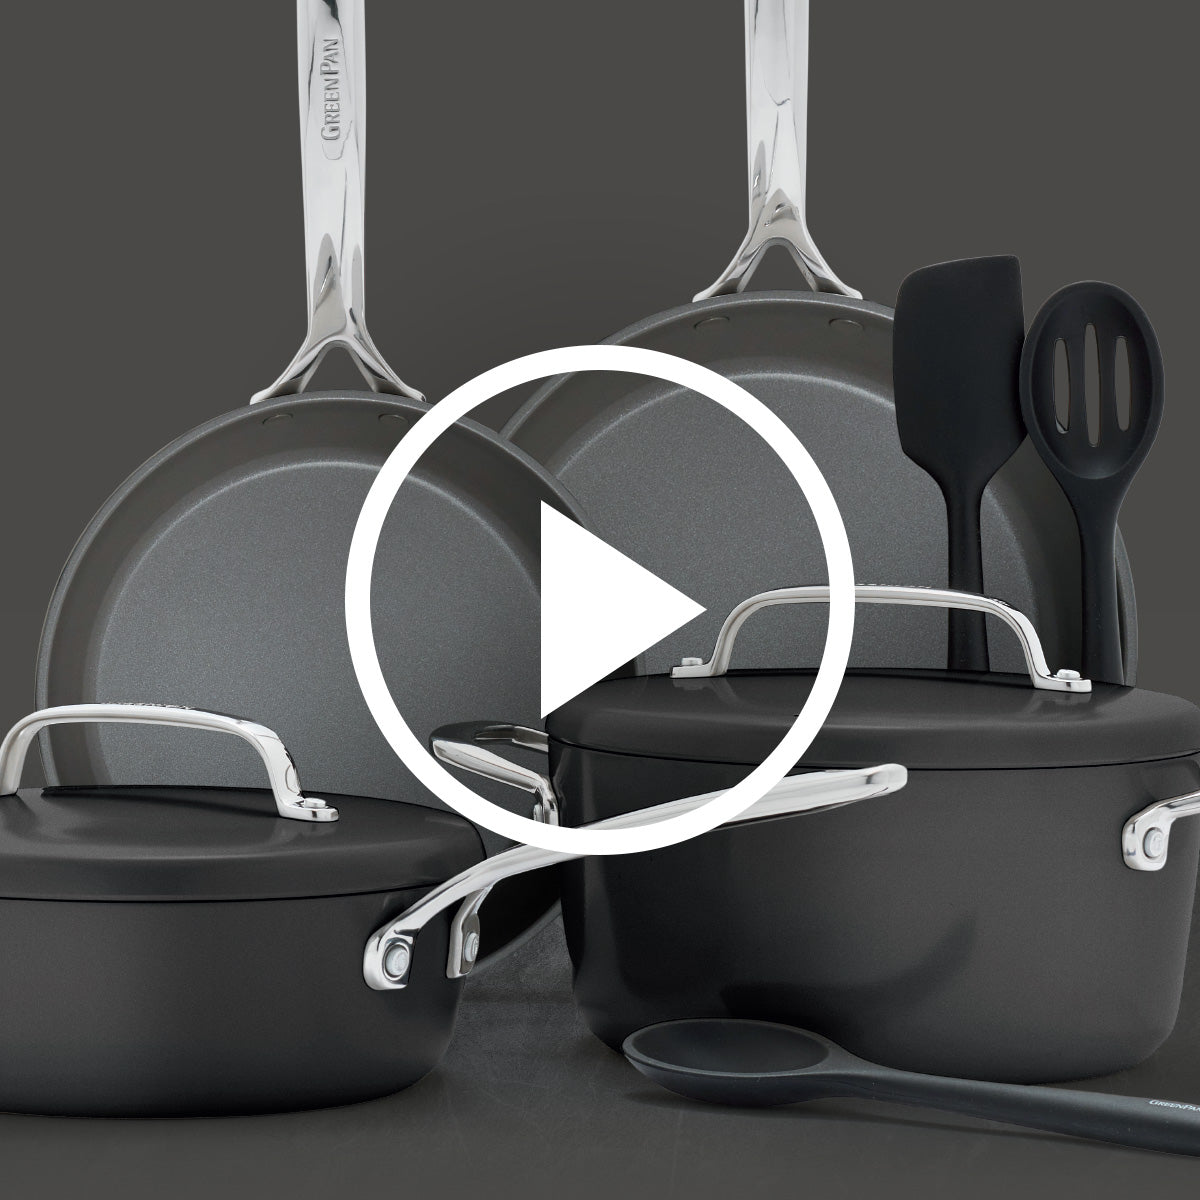 Calphalon Classic Ceramic 11-piece Cookware Set, Cookware Sets